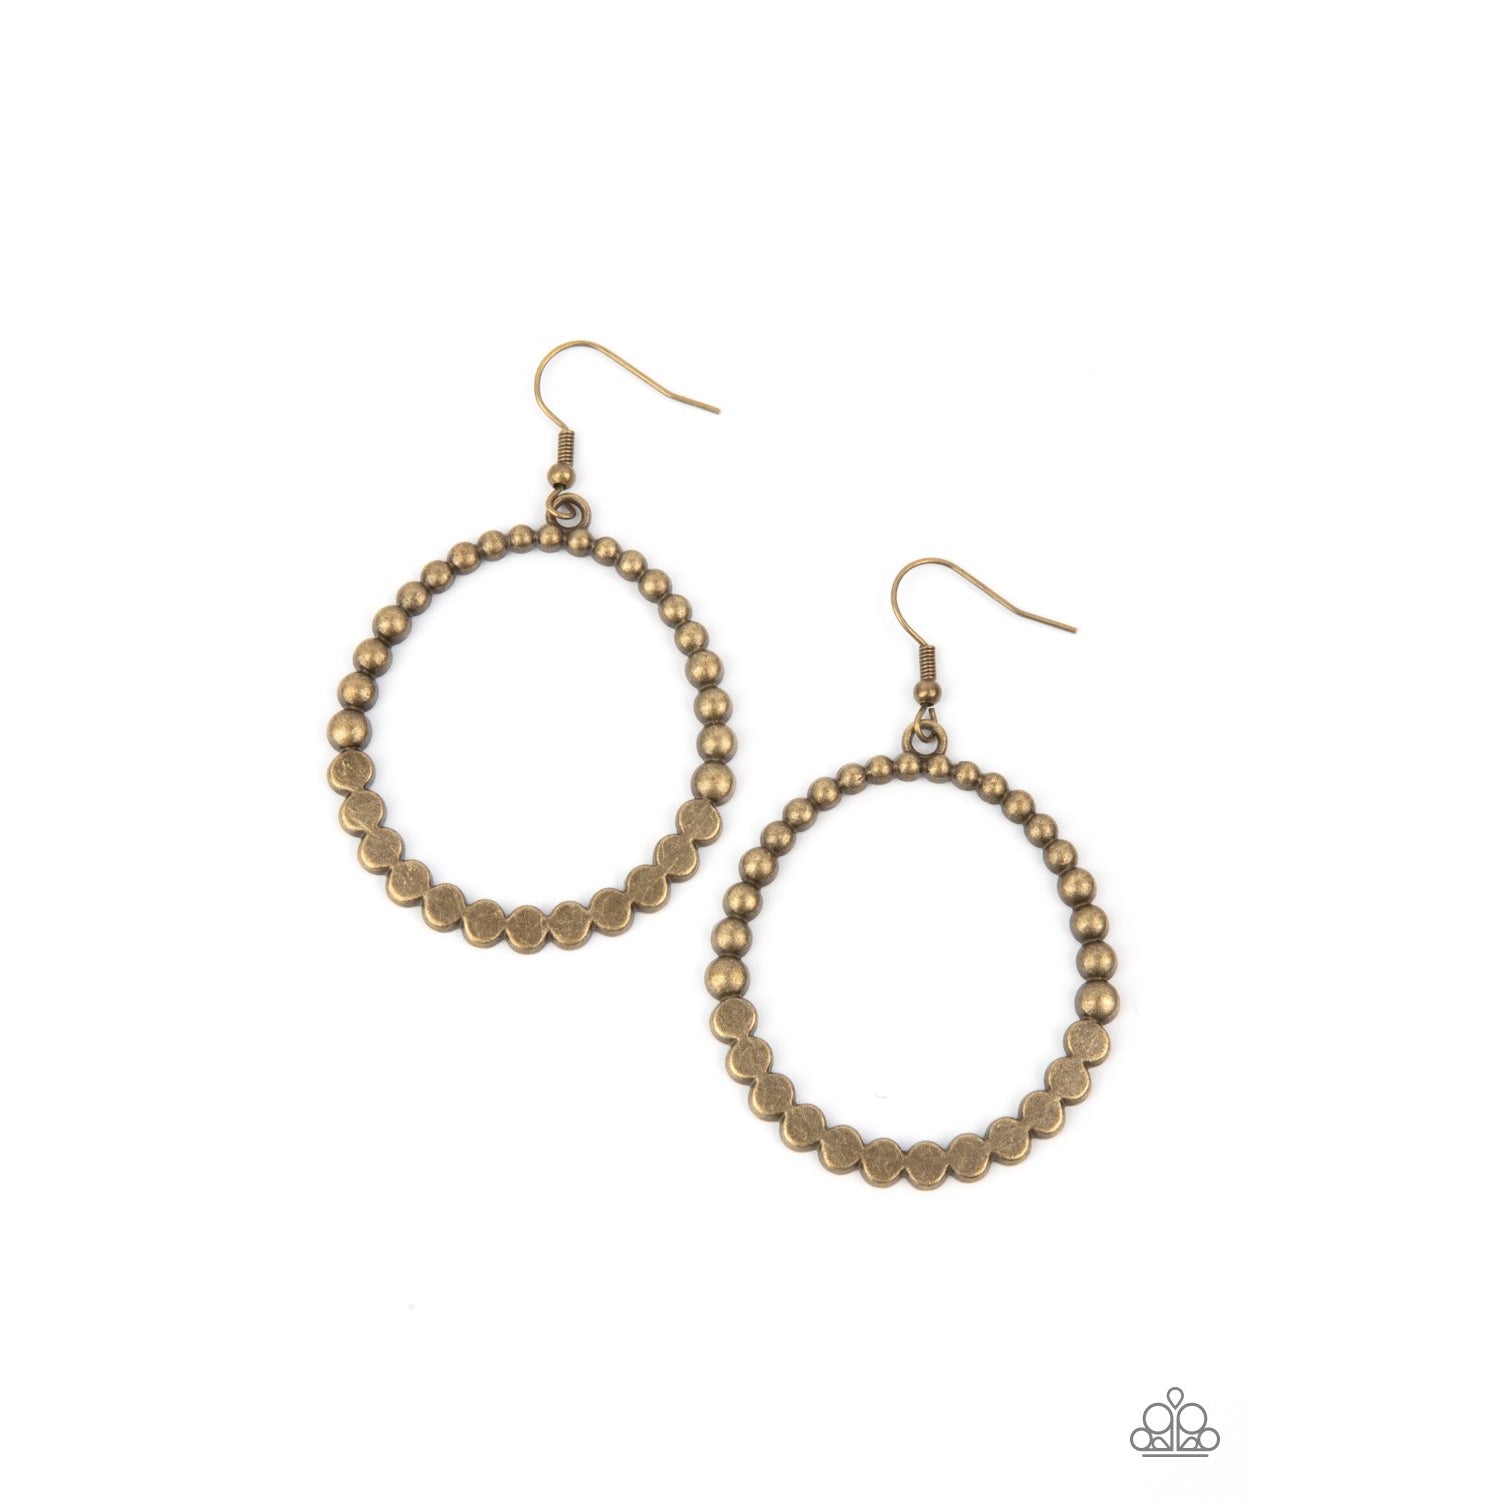 Rustic Society - Brass Hoops Earrings - Paparazzi Accessories - GlaMarous Titi Jewels